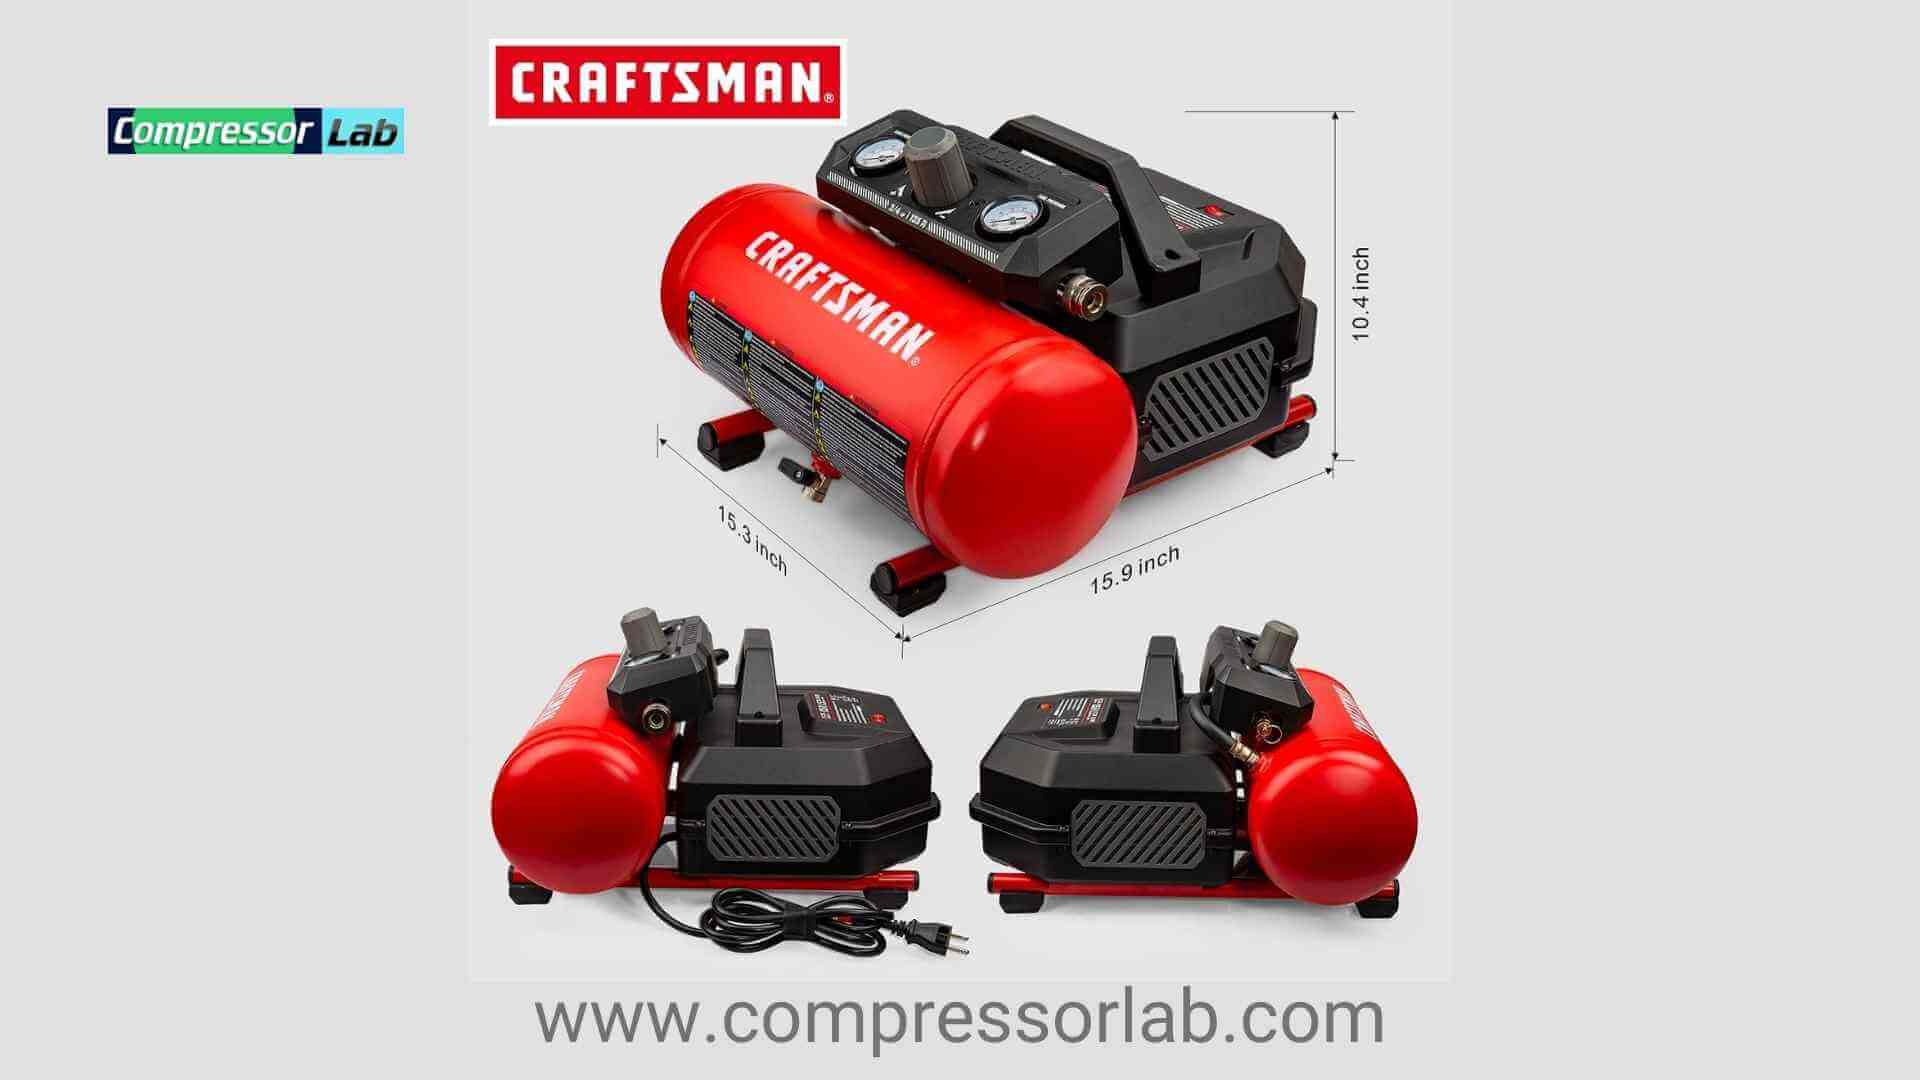 Craftsman 1.5 Gallon 3_4 HP Portable Air Compressor.jpg